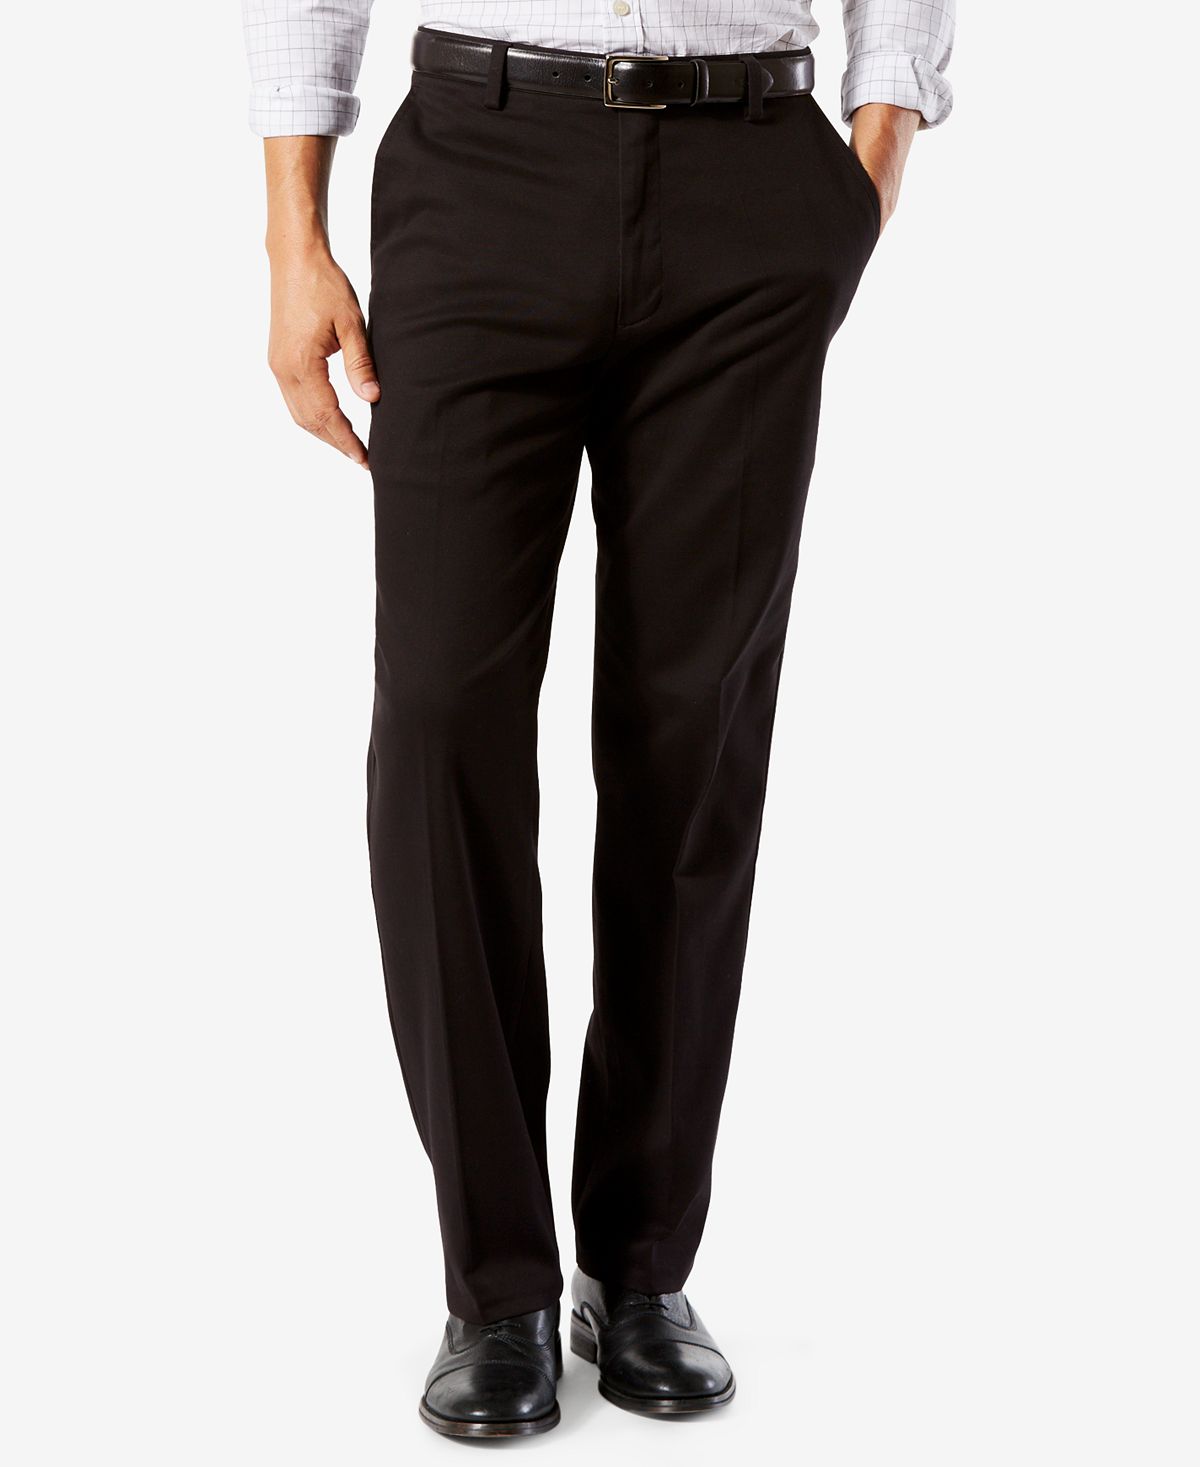 Мужские брюки easy classic fit цвета хаки стрейч Dockers, черный